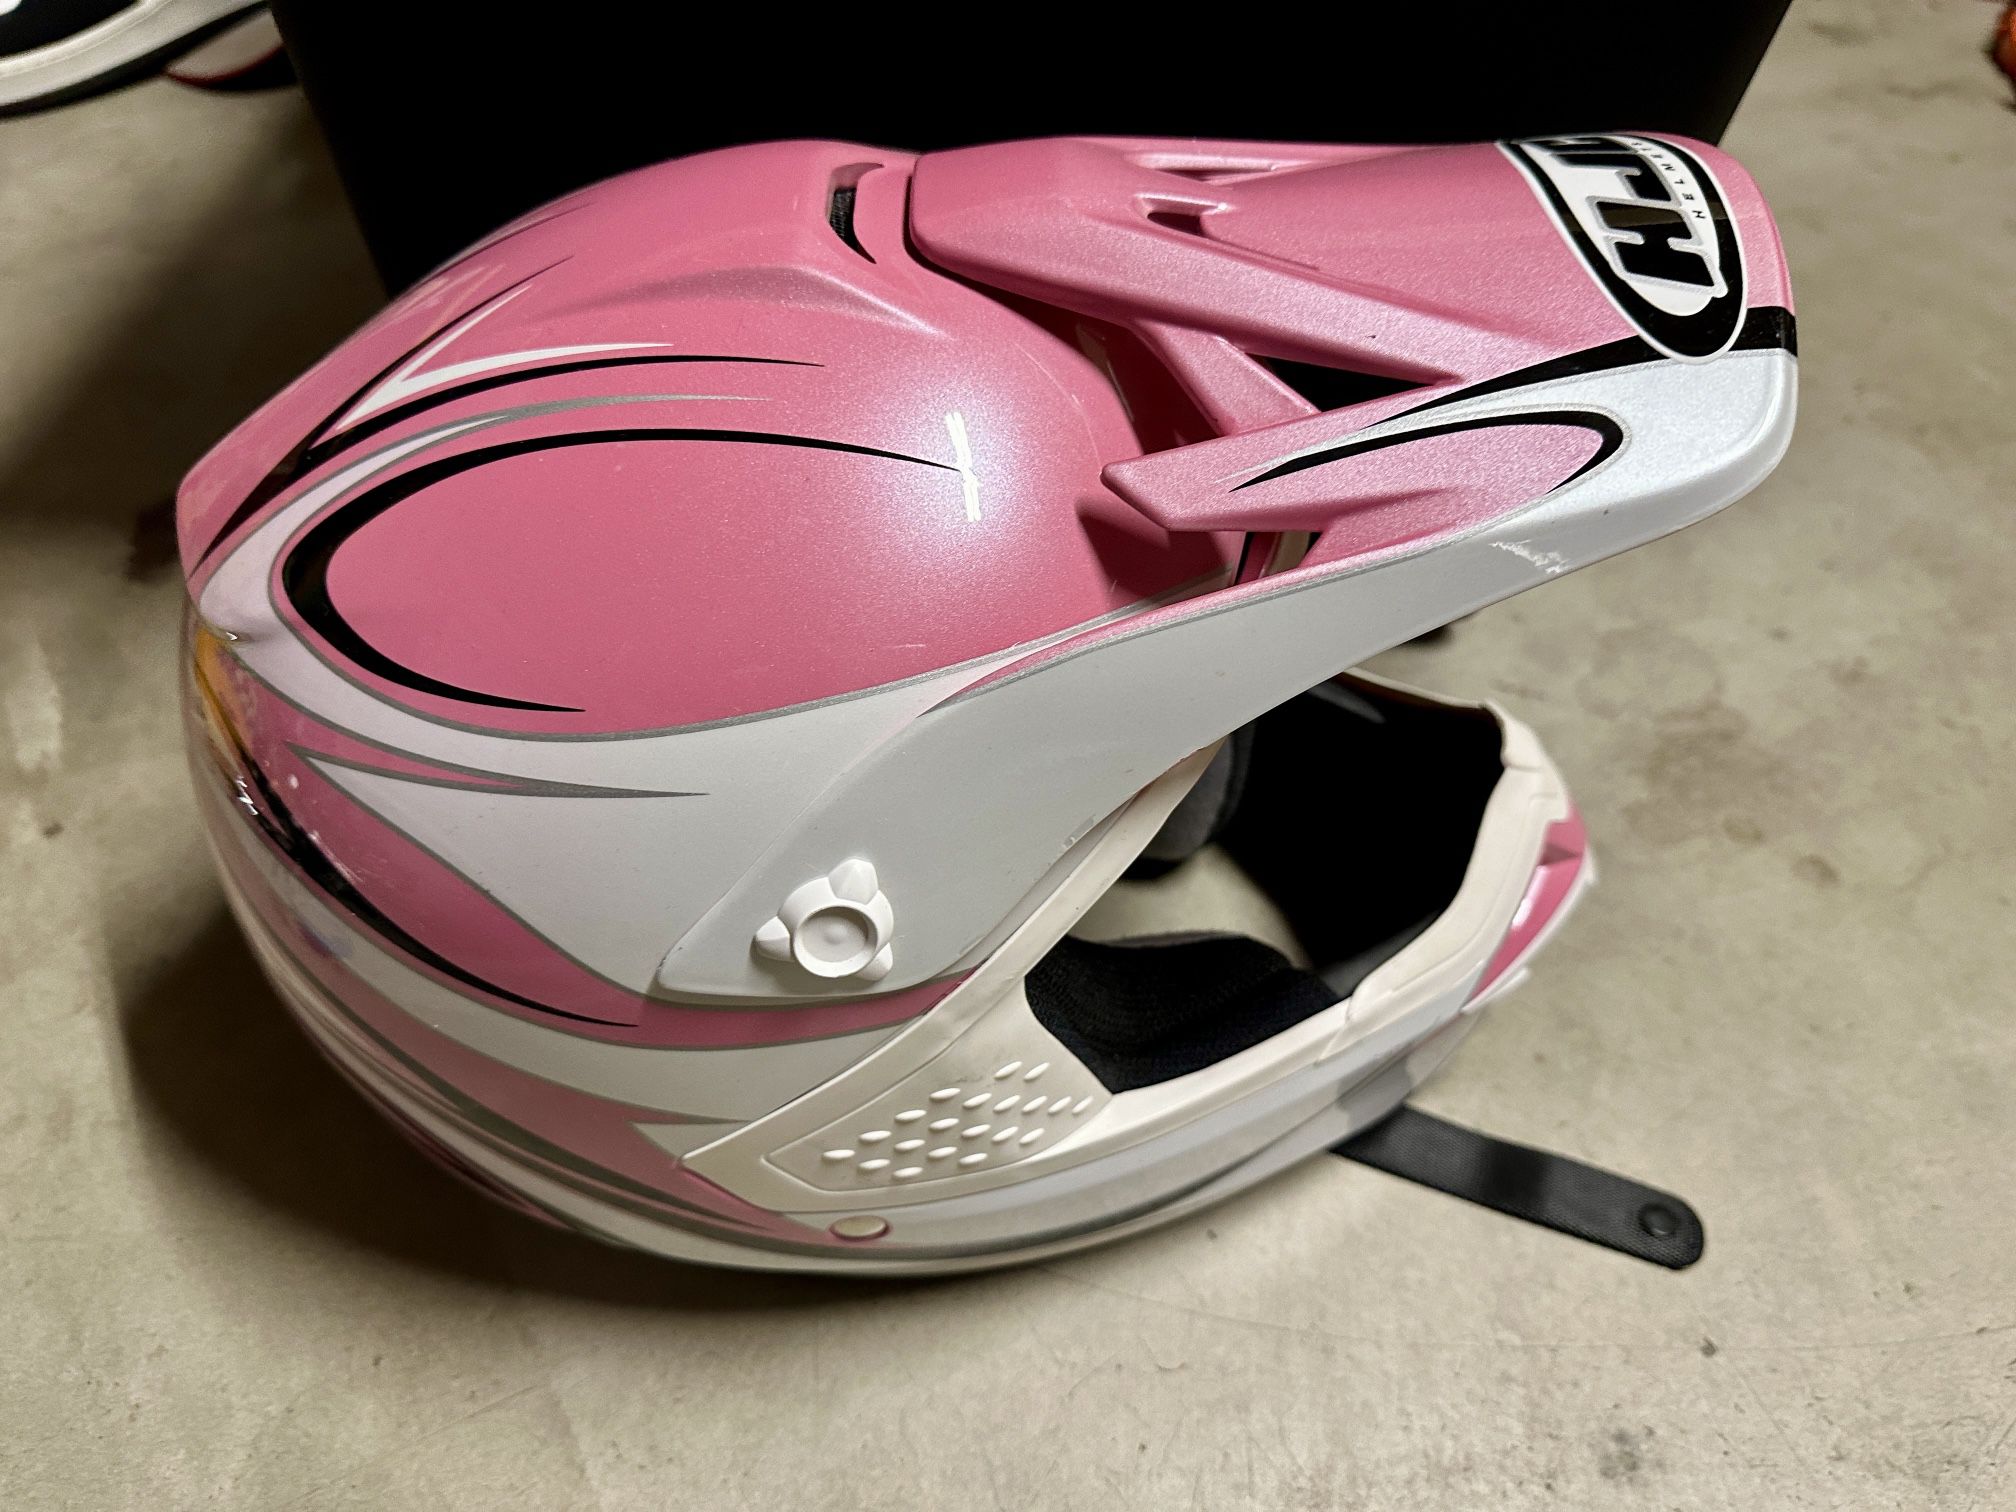  CS-MX WAVE Motocross Motorcycle Off Road Helmet Size Medium, Pink & White